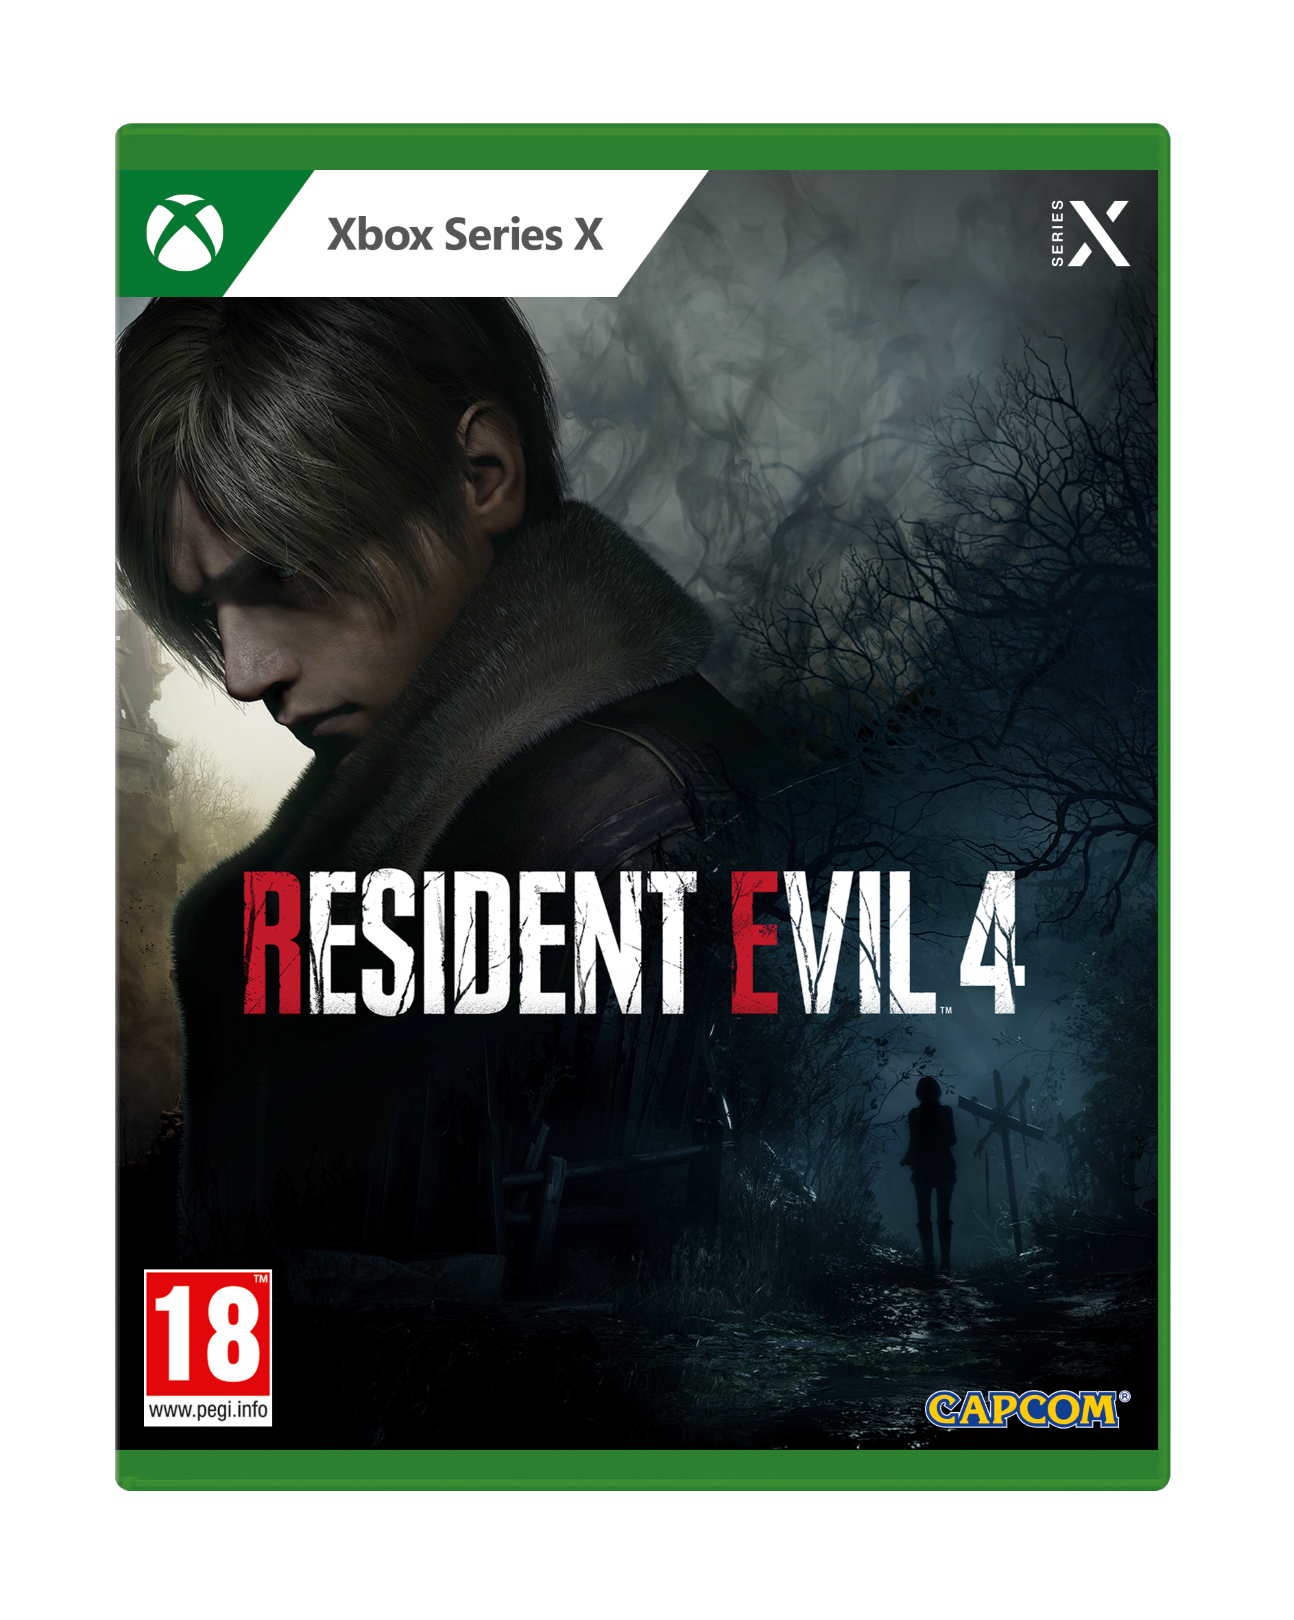 Resident Evil 4 Steelbook Edition (Xbox Series X)